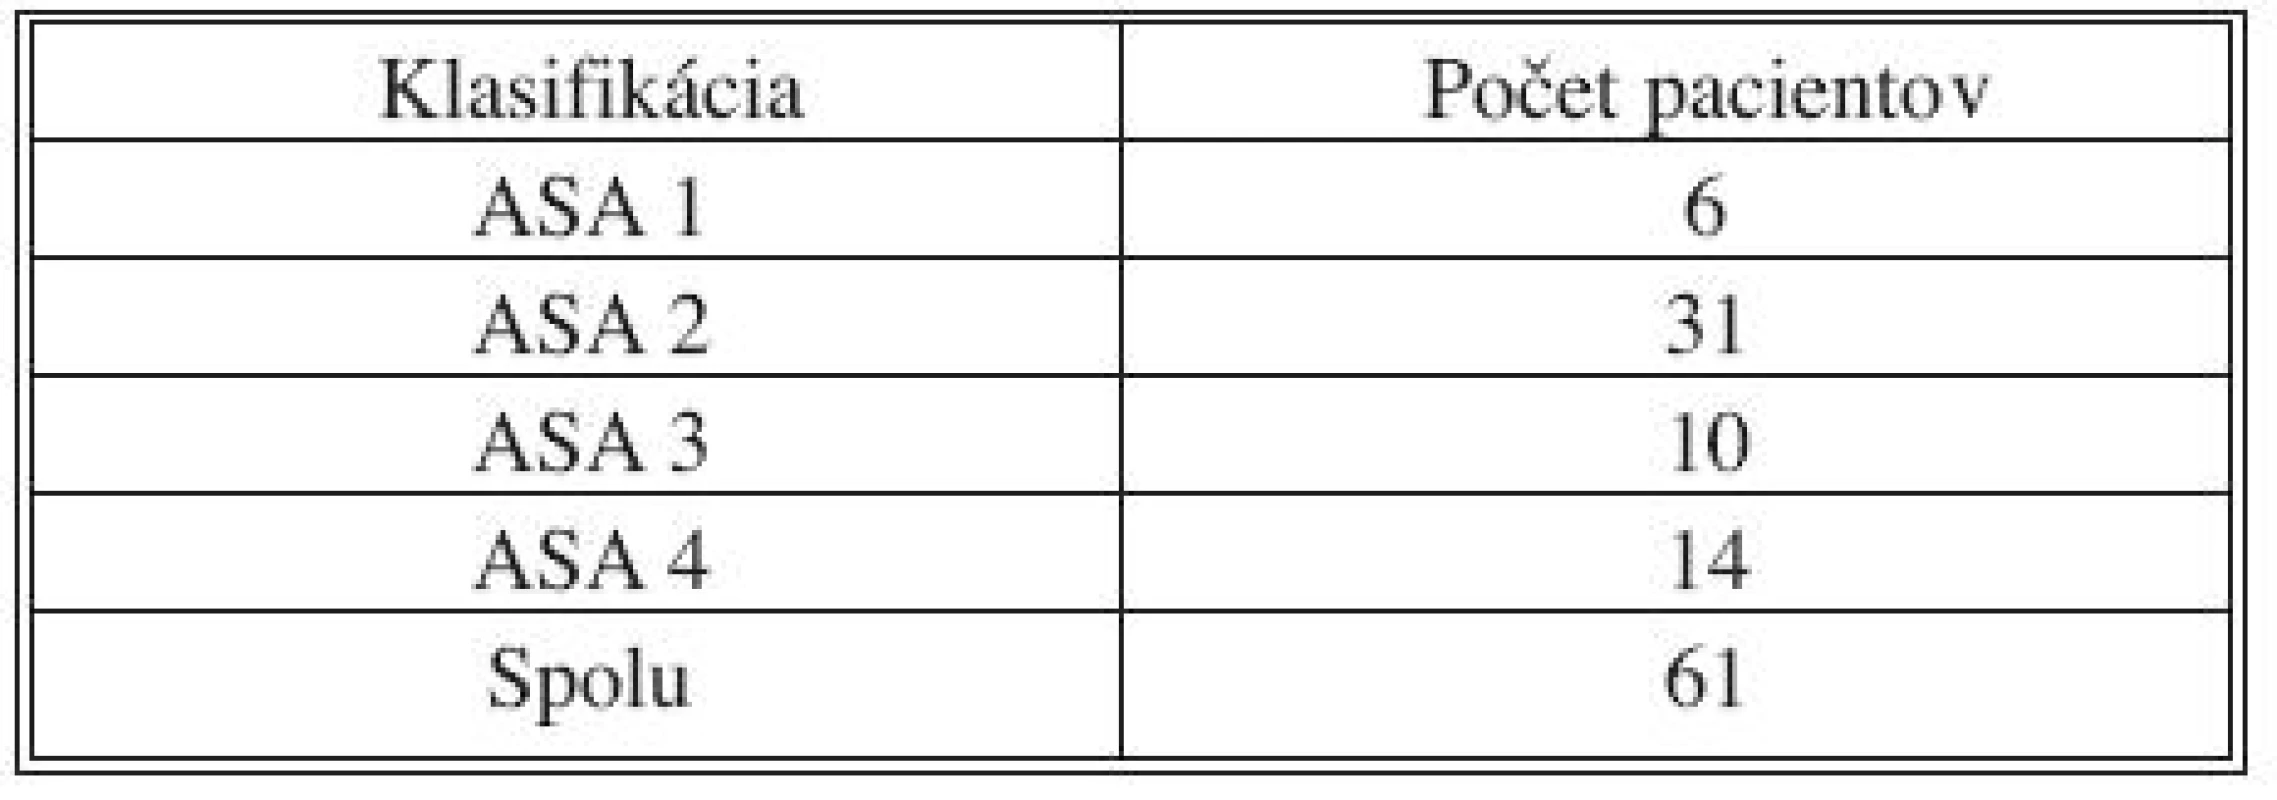 ASA klasifikácia (IV. chirurgická klinika LF UKo a FNsP Bratislava, Slovenská republika, 2004–2008)
Tab. 2. ASA classification